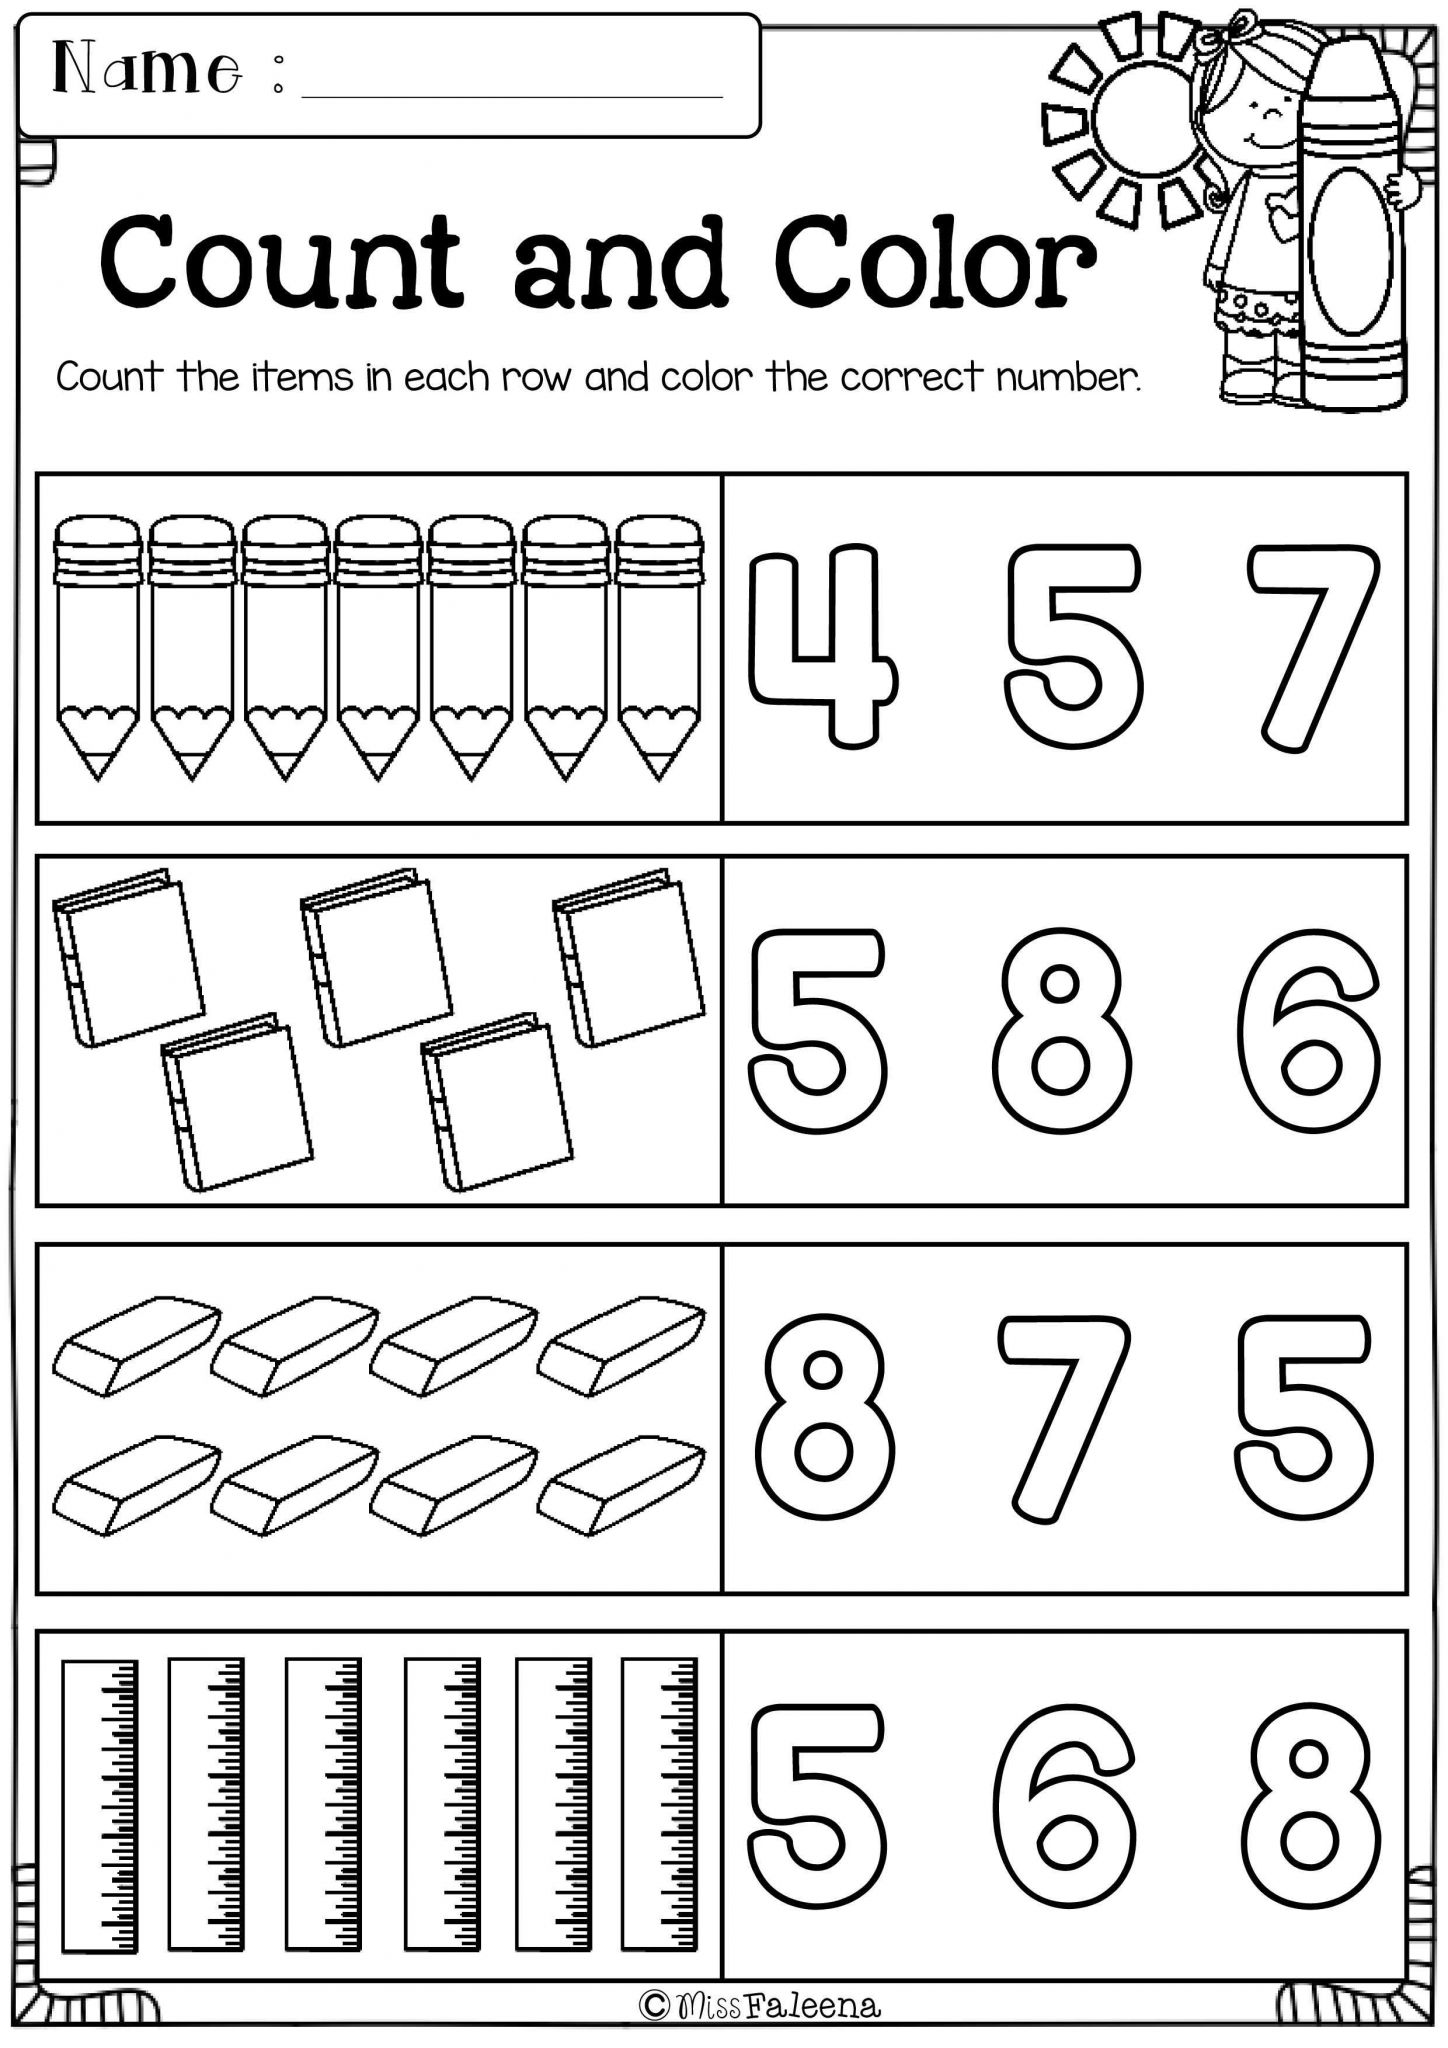 Free Sentence Scramble Worksheets Also Free Literacy Worksheets for Kindergarten Elegant Od Word Family